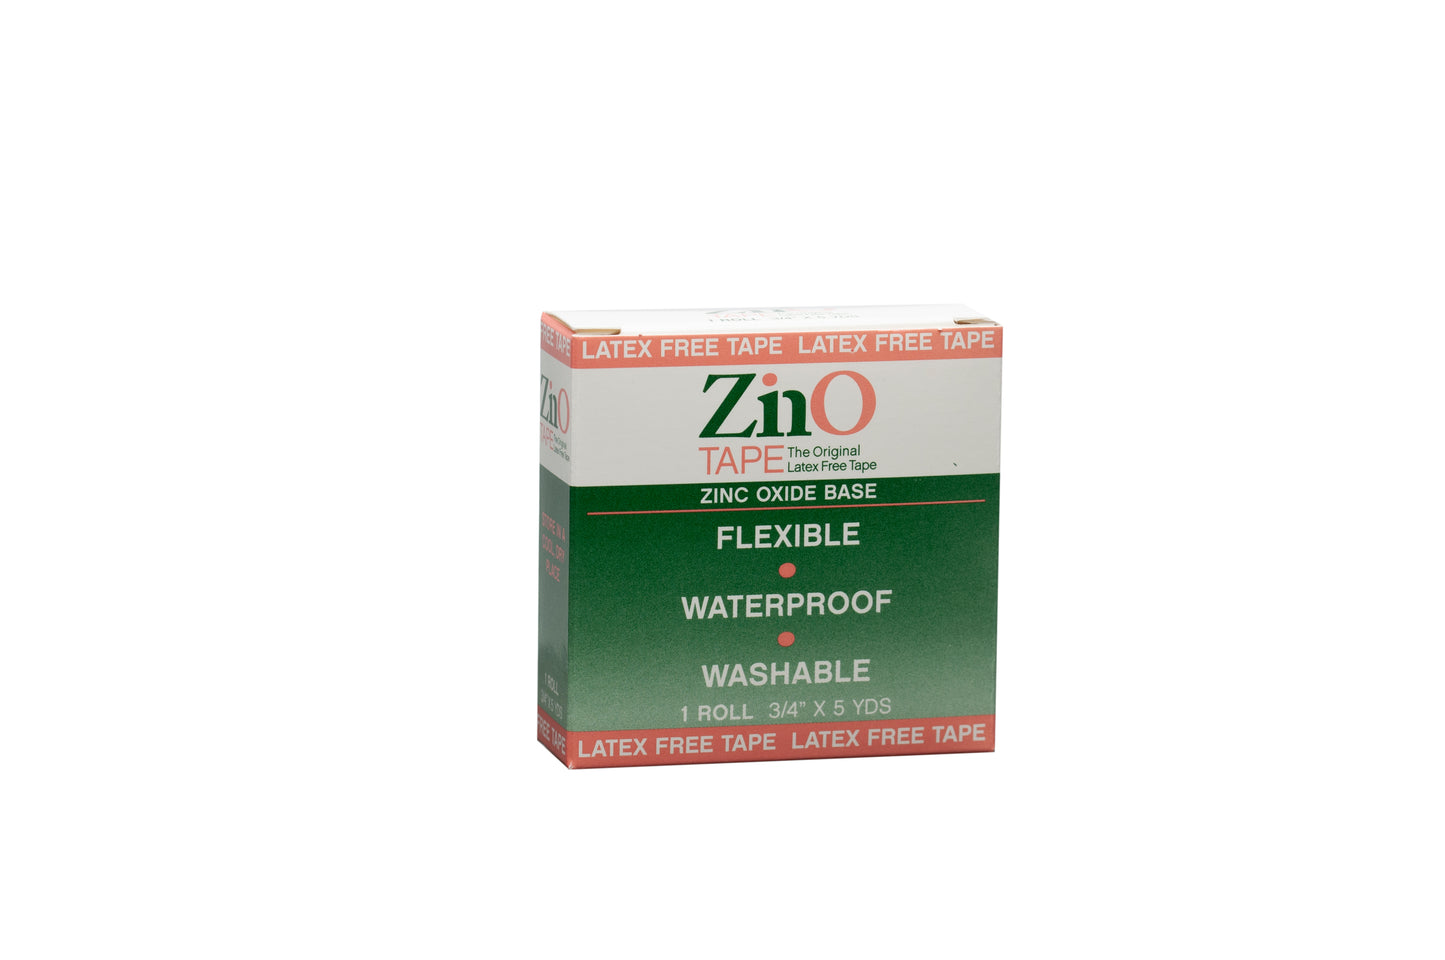 ZinO-Tape™: Zino Zinc Oxide Tape, 3/4"x 5 yds / 15 Rolls per master box